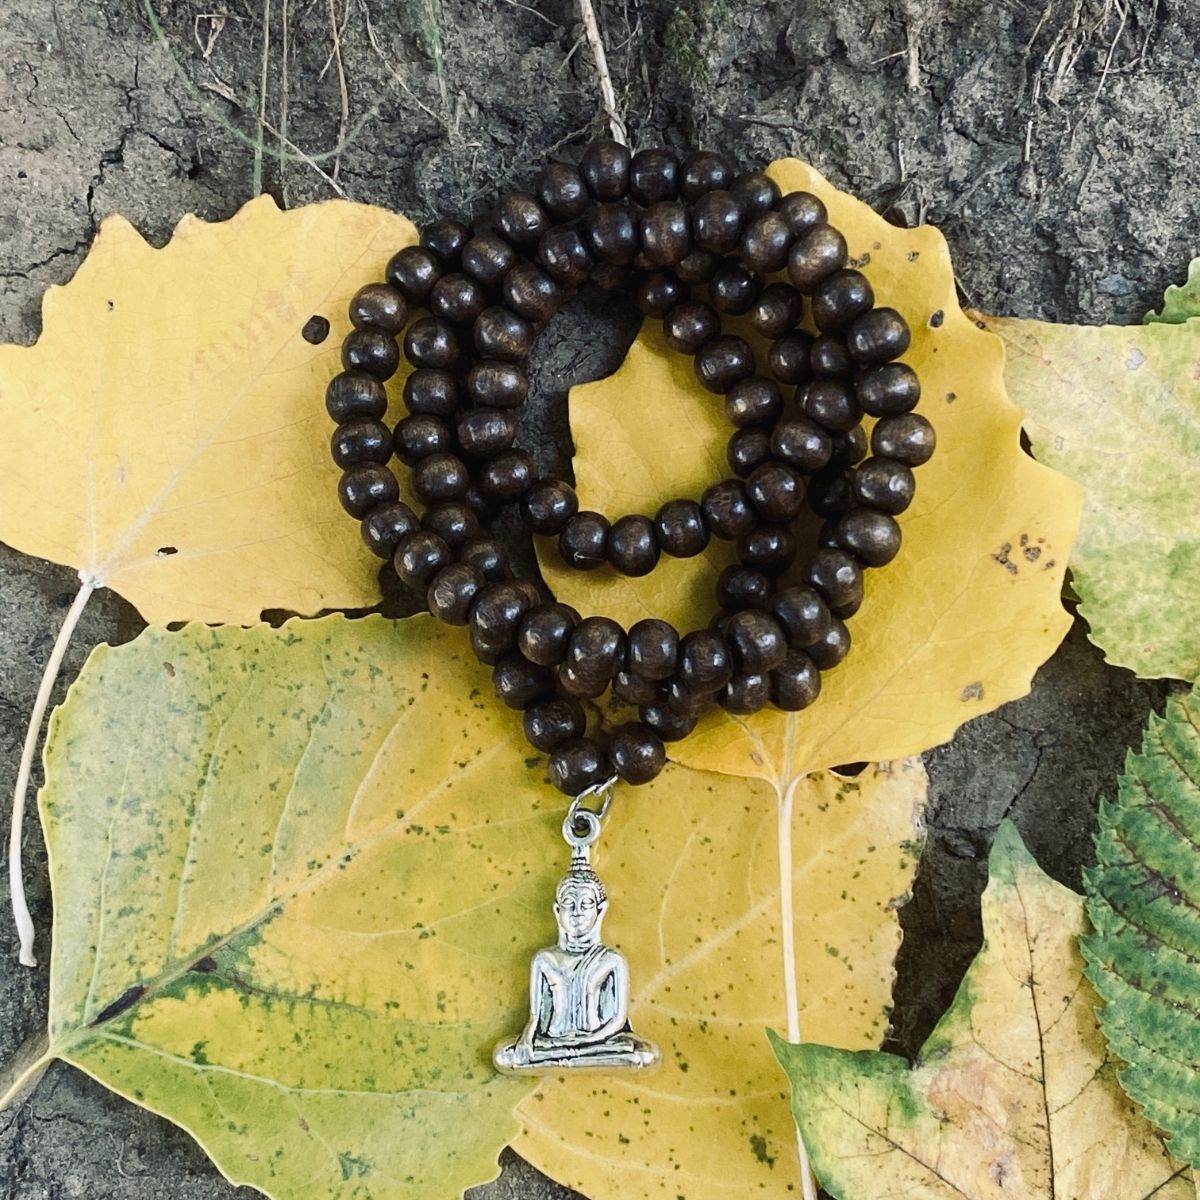 108 Yoga Mala Beads Meaning & History of Yoga Prayer Beads